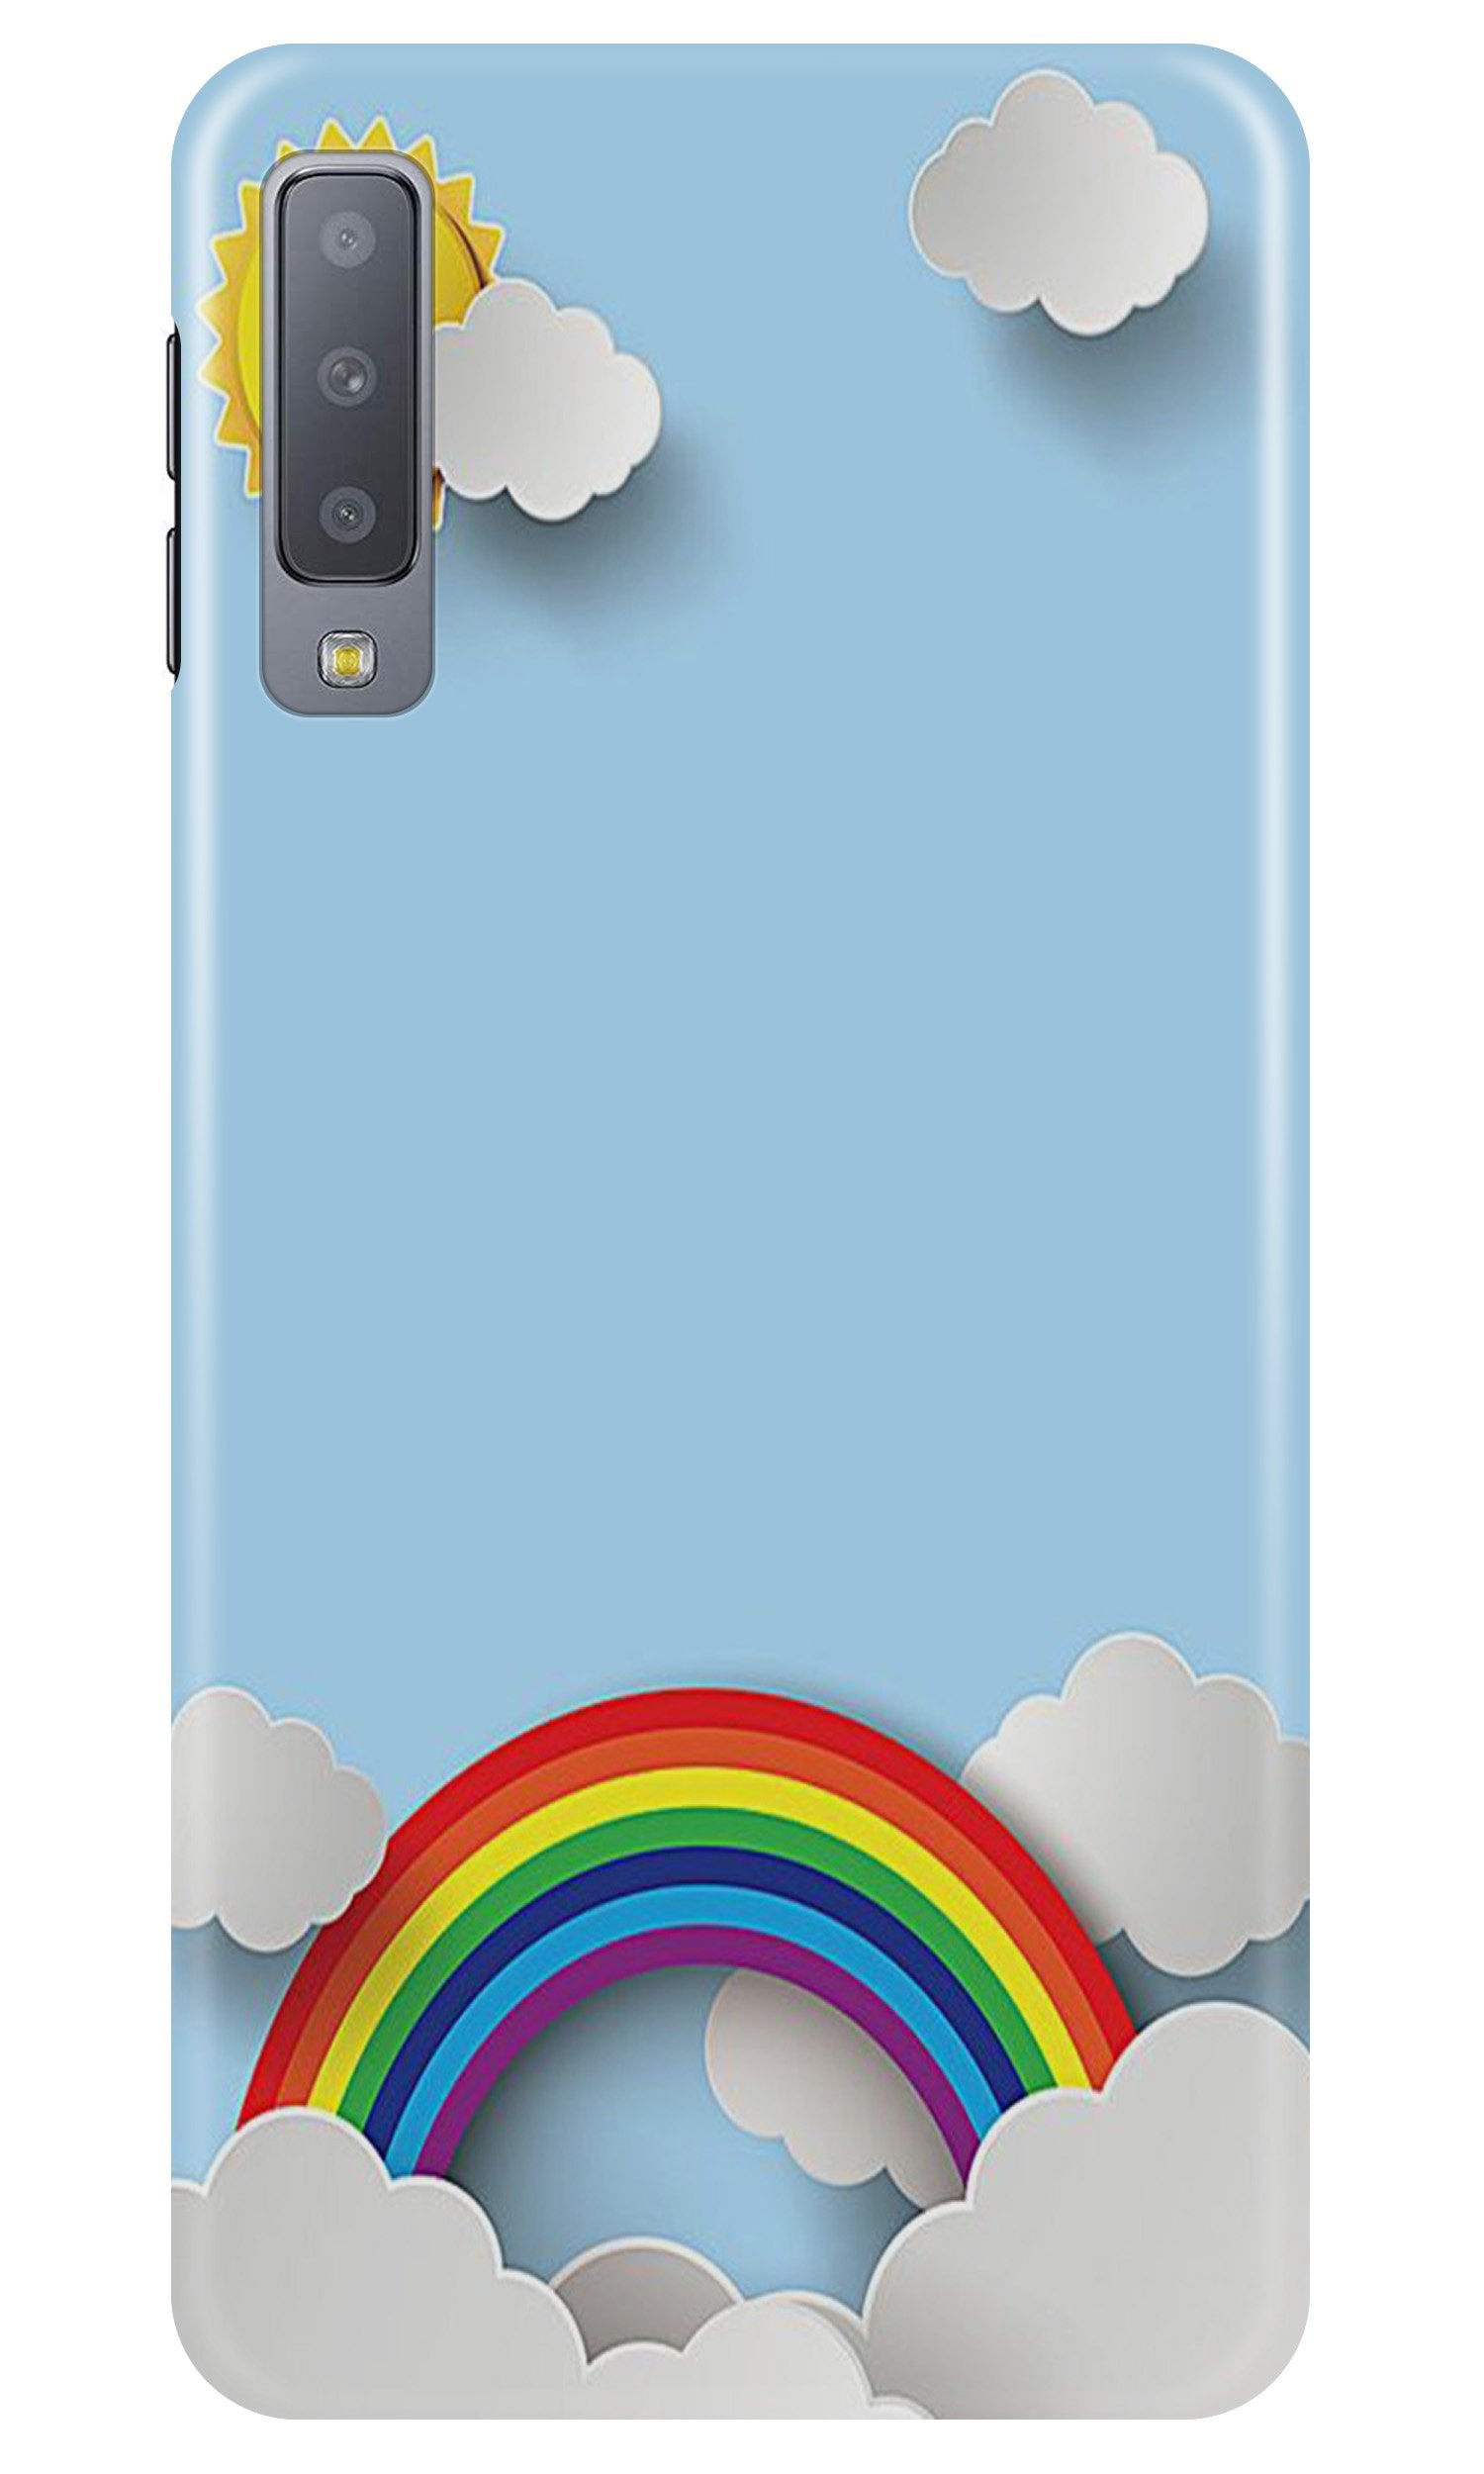 Rainbow Case for Samung Galaxy A70s (Design No. 225)